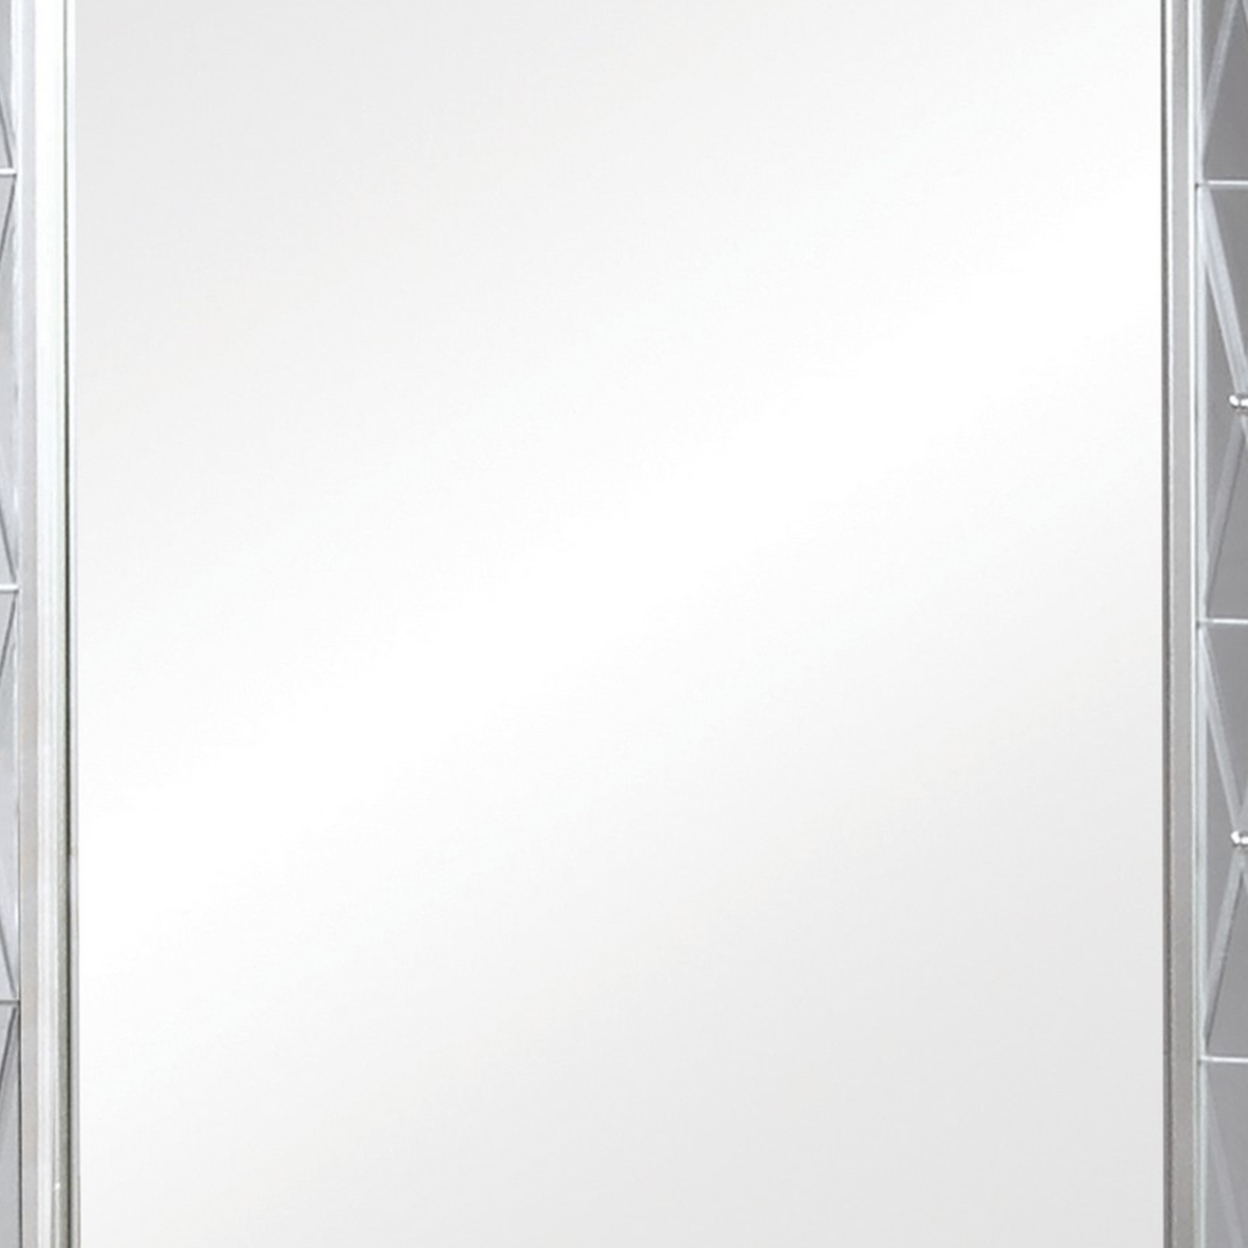 41 Inch Vanity Mirror, Etched Glass Trim, Wood Frame, Metallic Silver